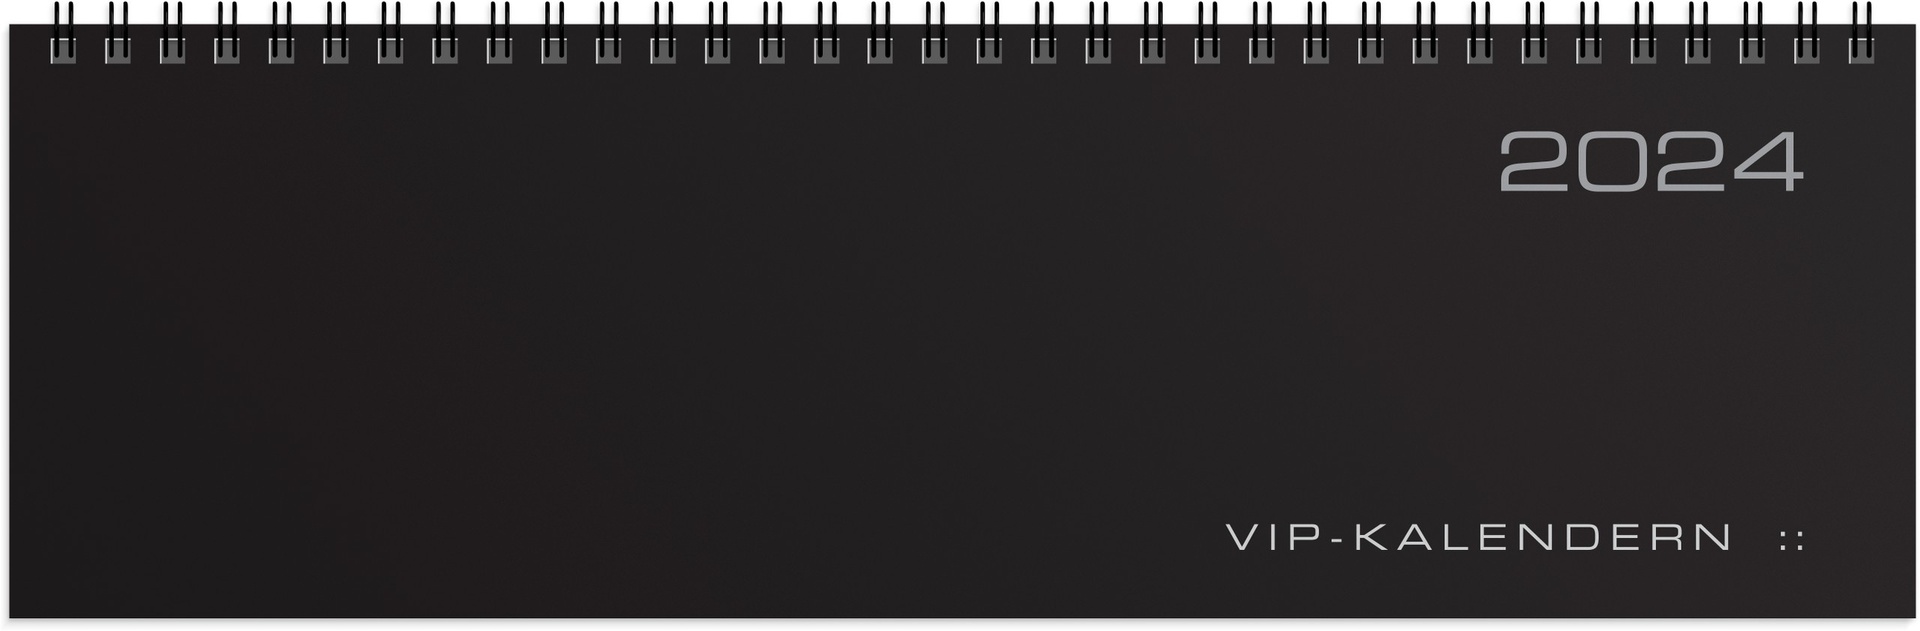 [61145124] Kalender 2024 VIP-kalendern